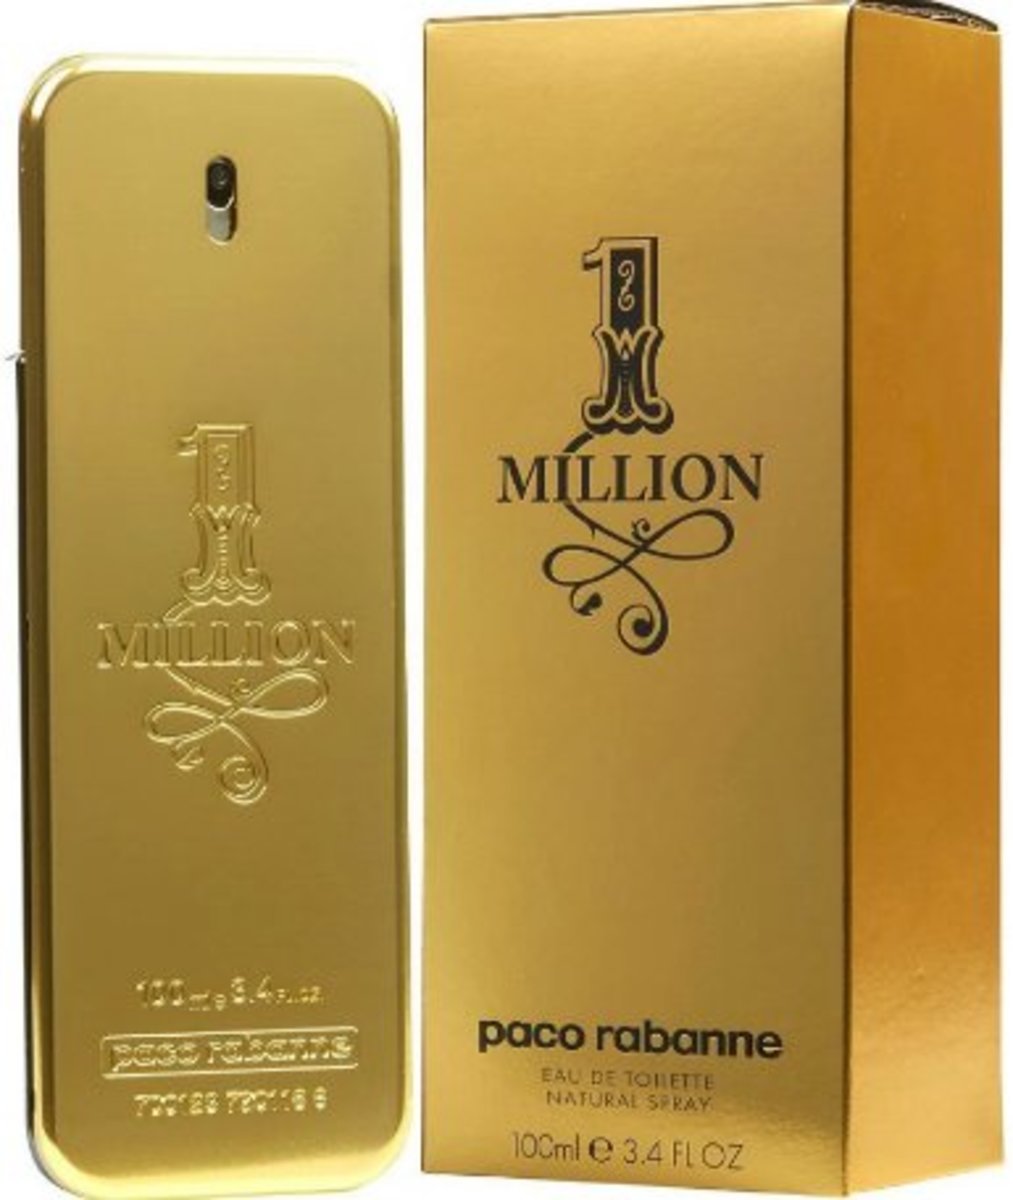 paco rabanne 1 million 100ml price